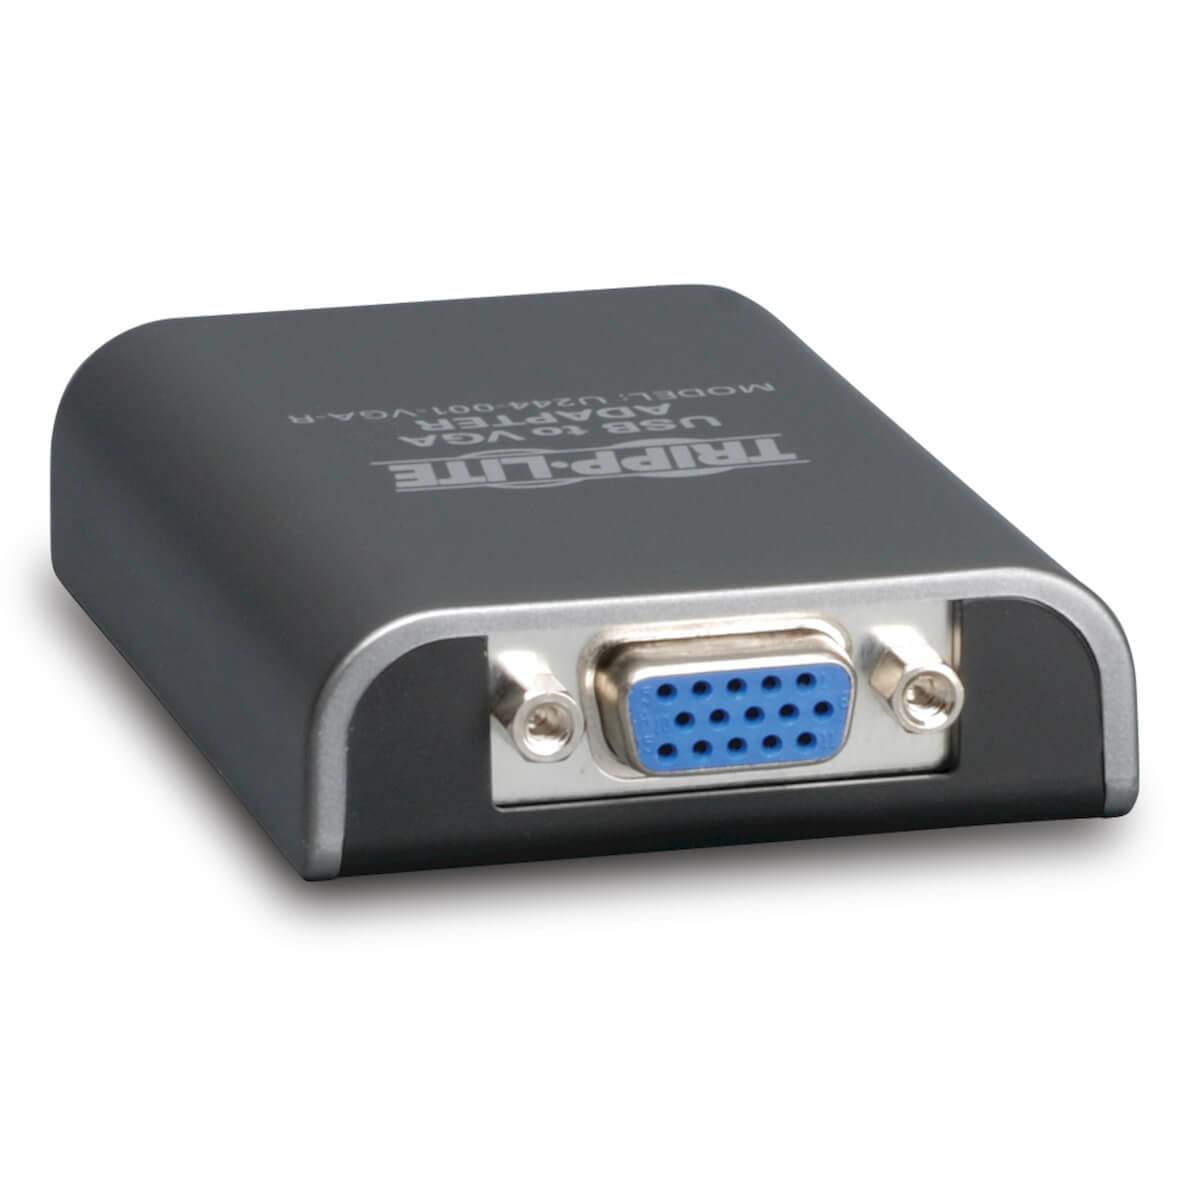 Rca Informatique - image du produit : USB 2.0 TO VGA DUAL MONITOR